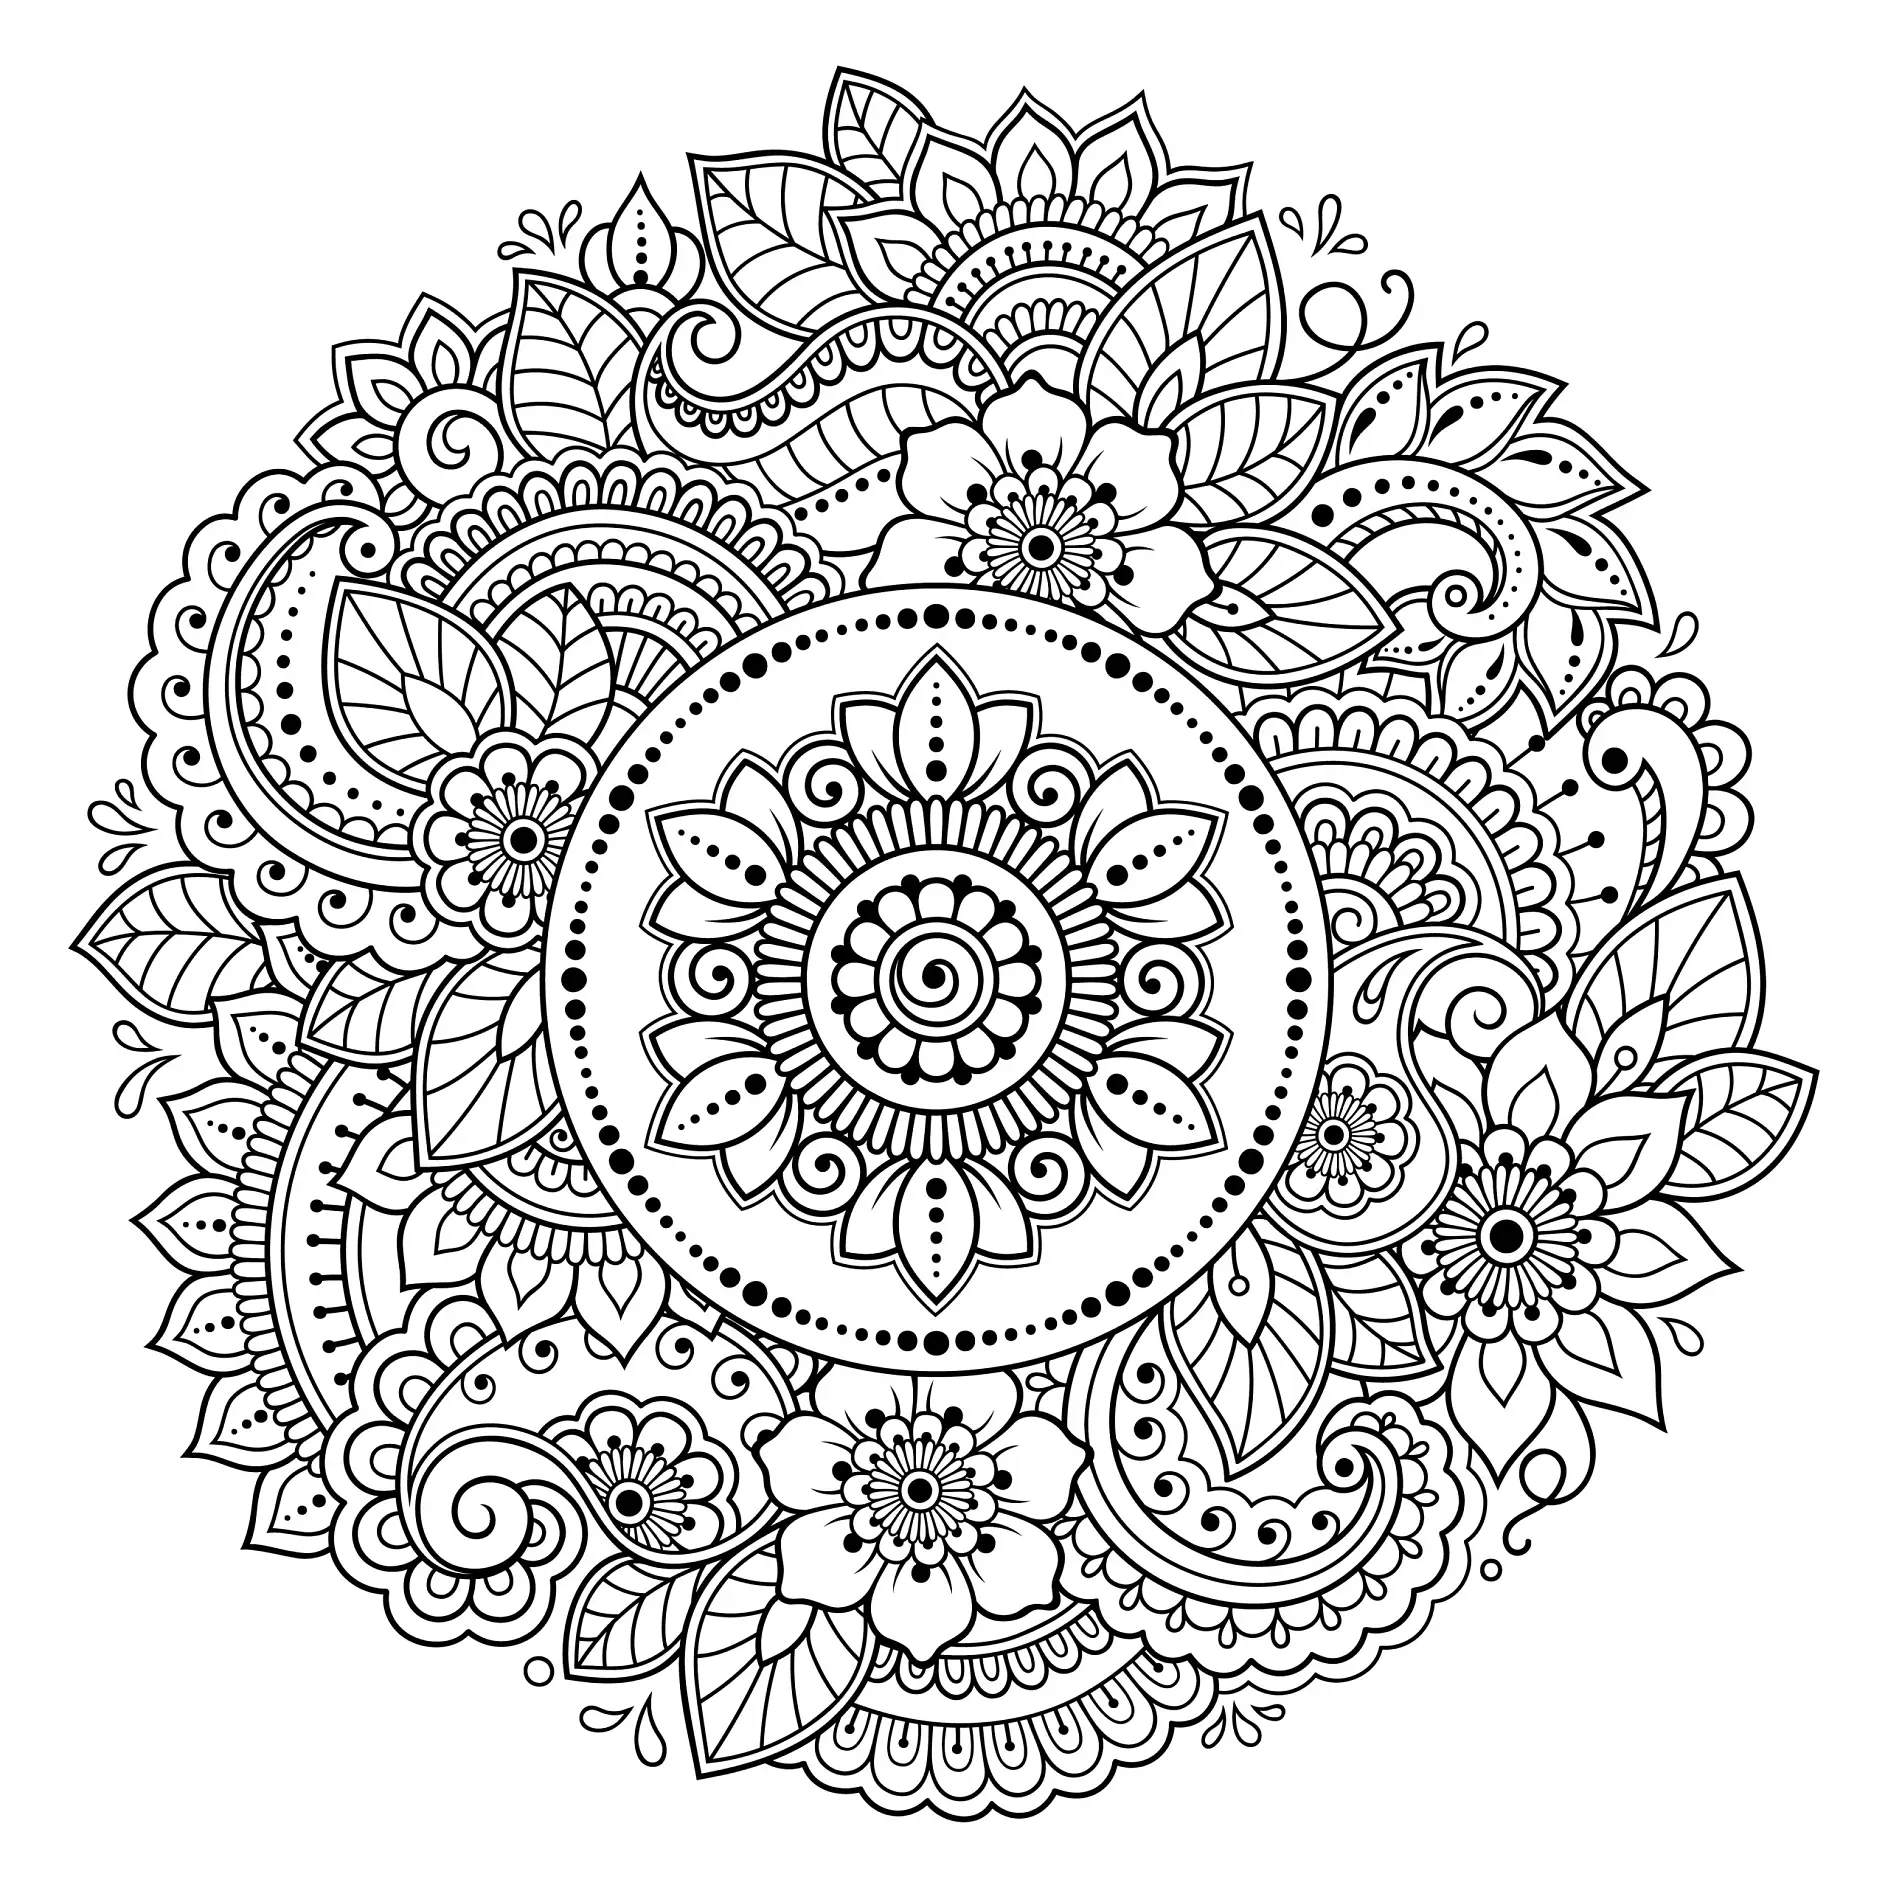 Ausmalbild Mandala komplexe Blumen und Blättermuster